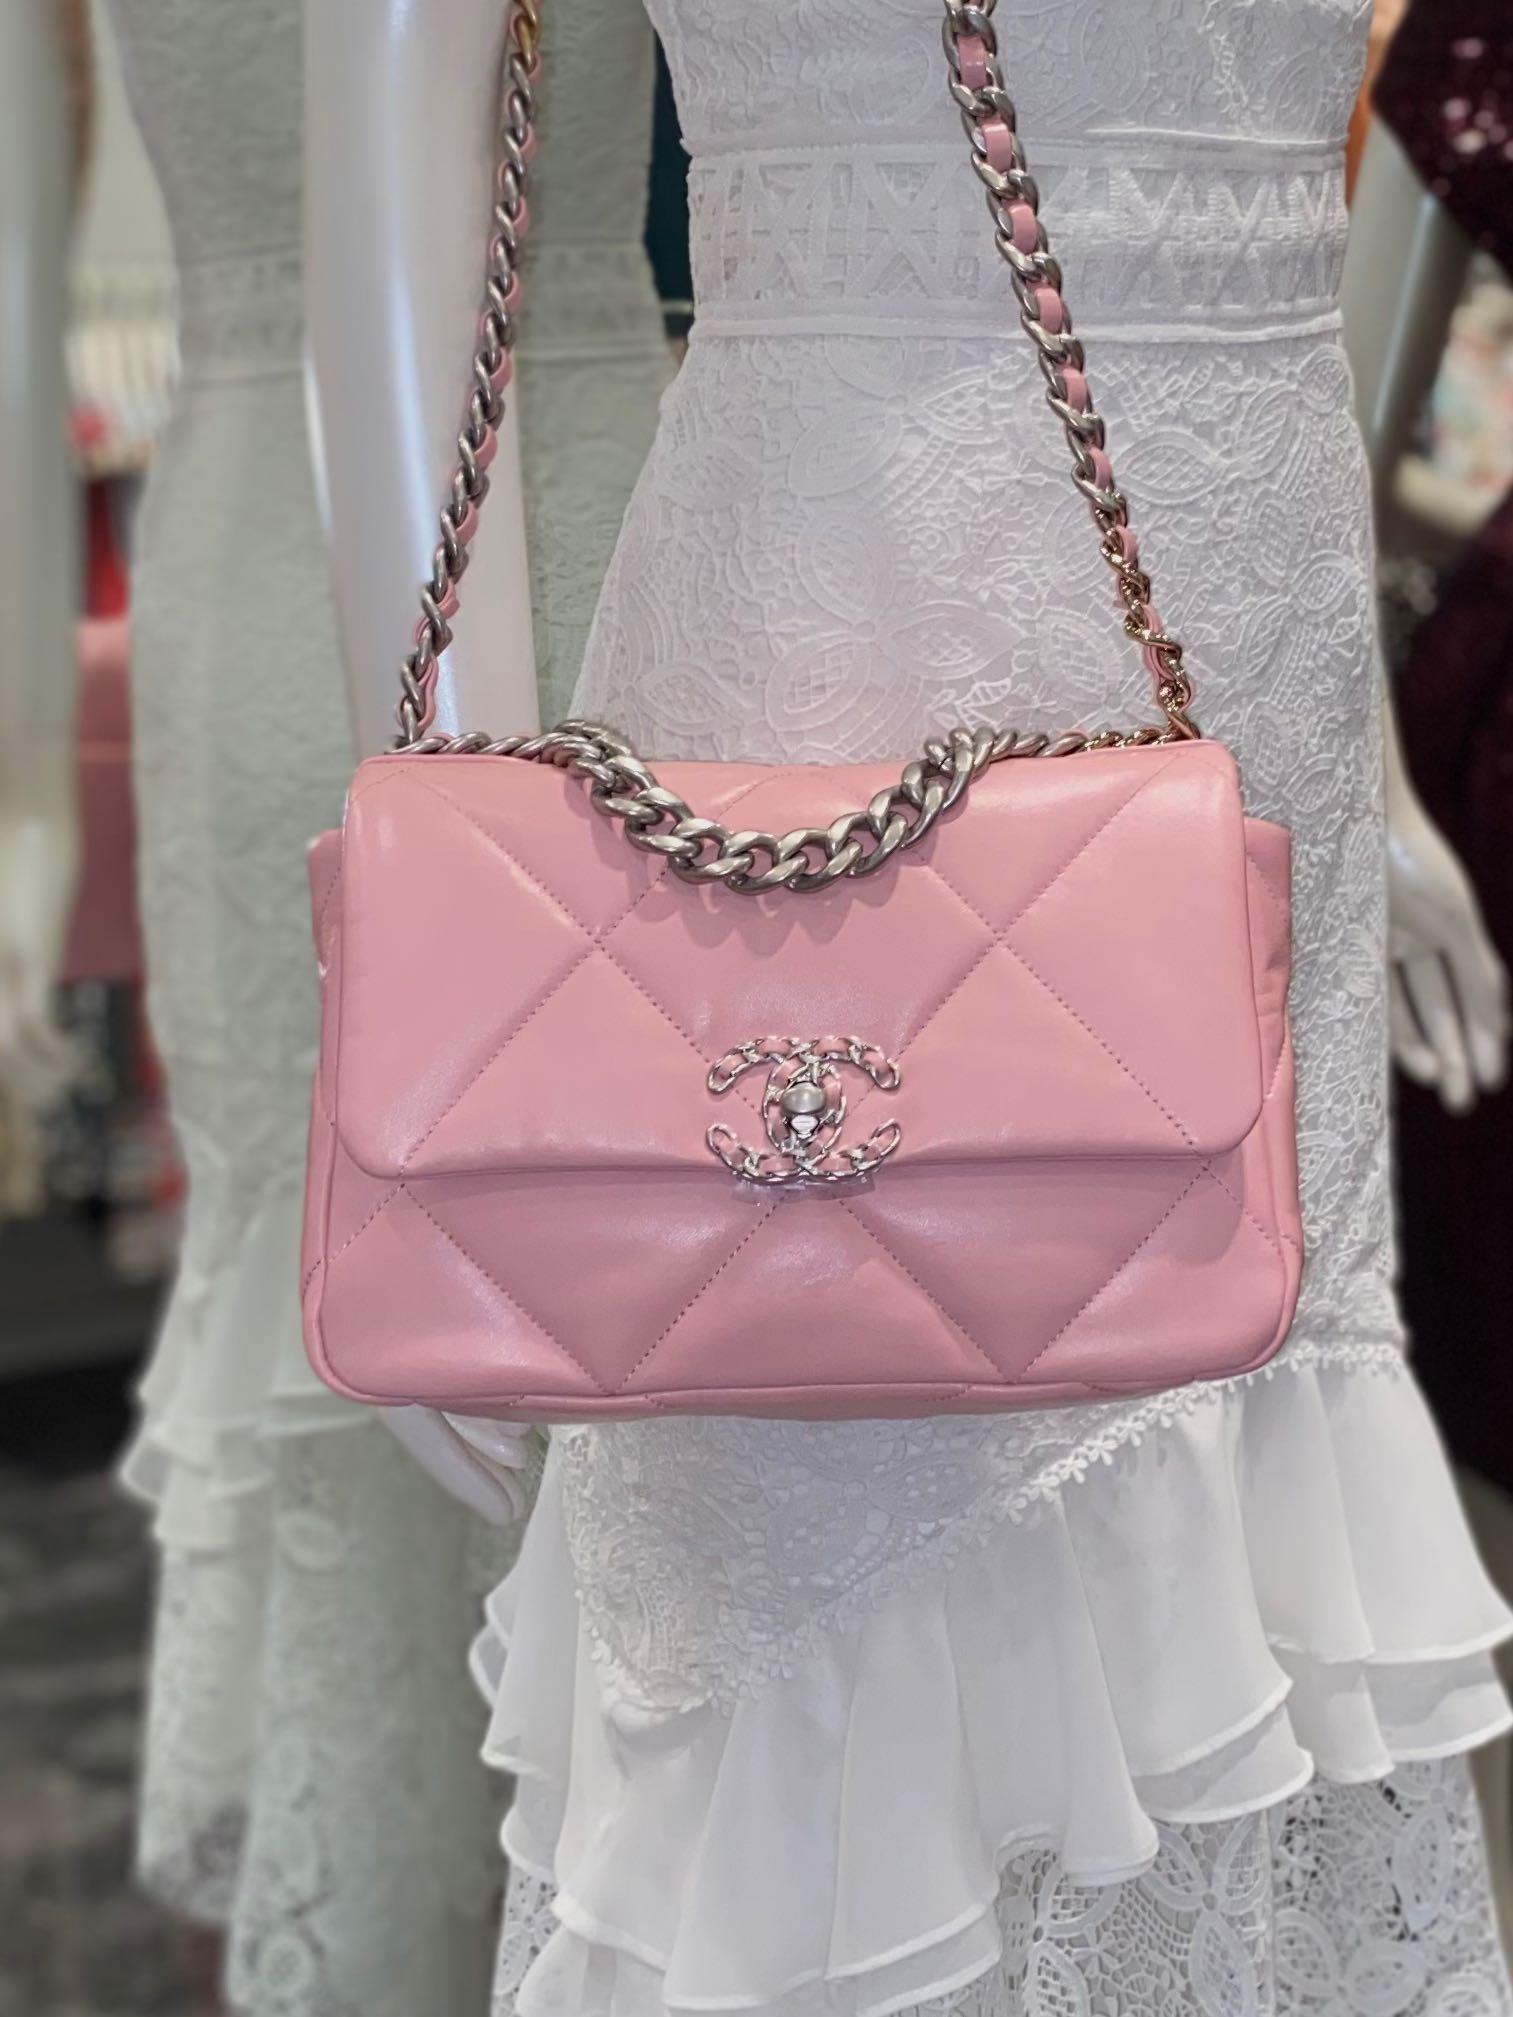 New 🦄 Chanel 19 bag 22C small baby pink silver gold hardware 🦄 chain logo  handbag purse classic flap bag